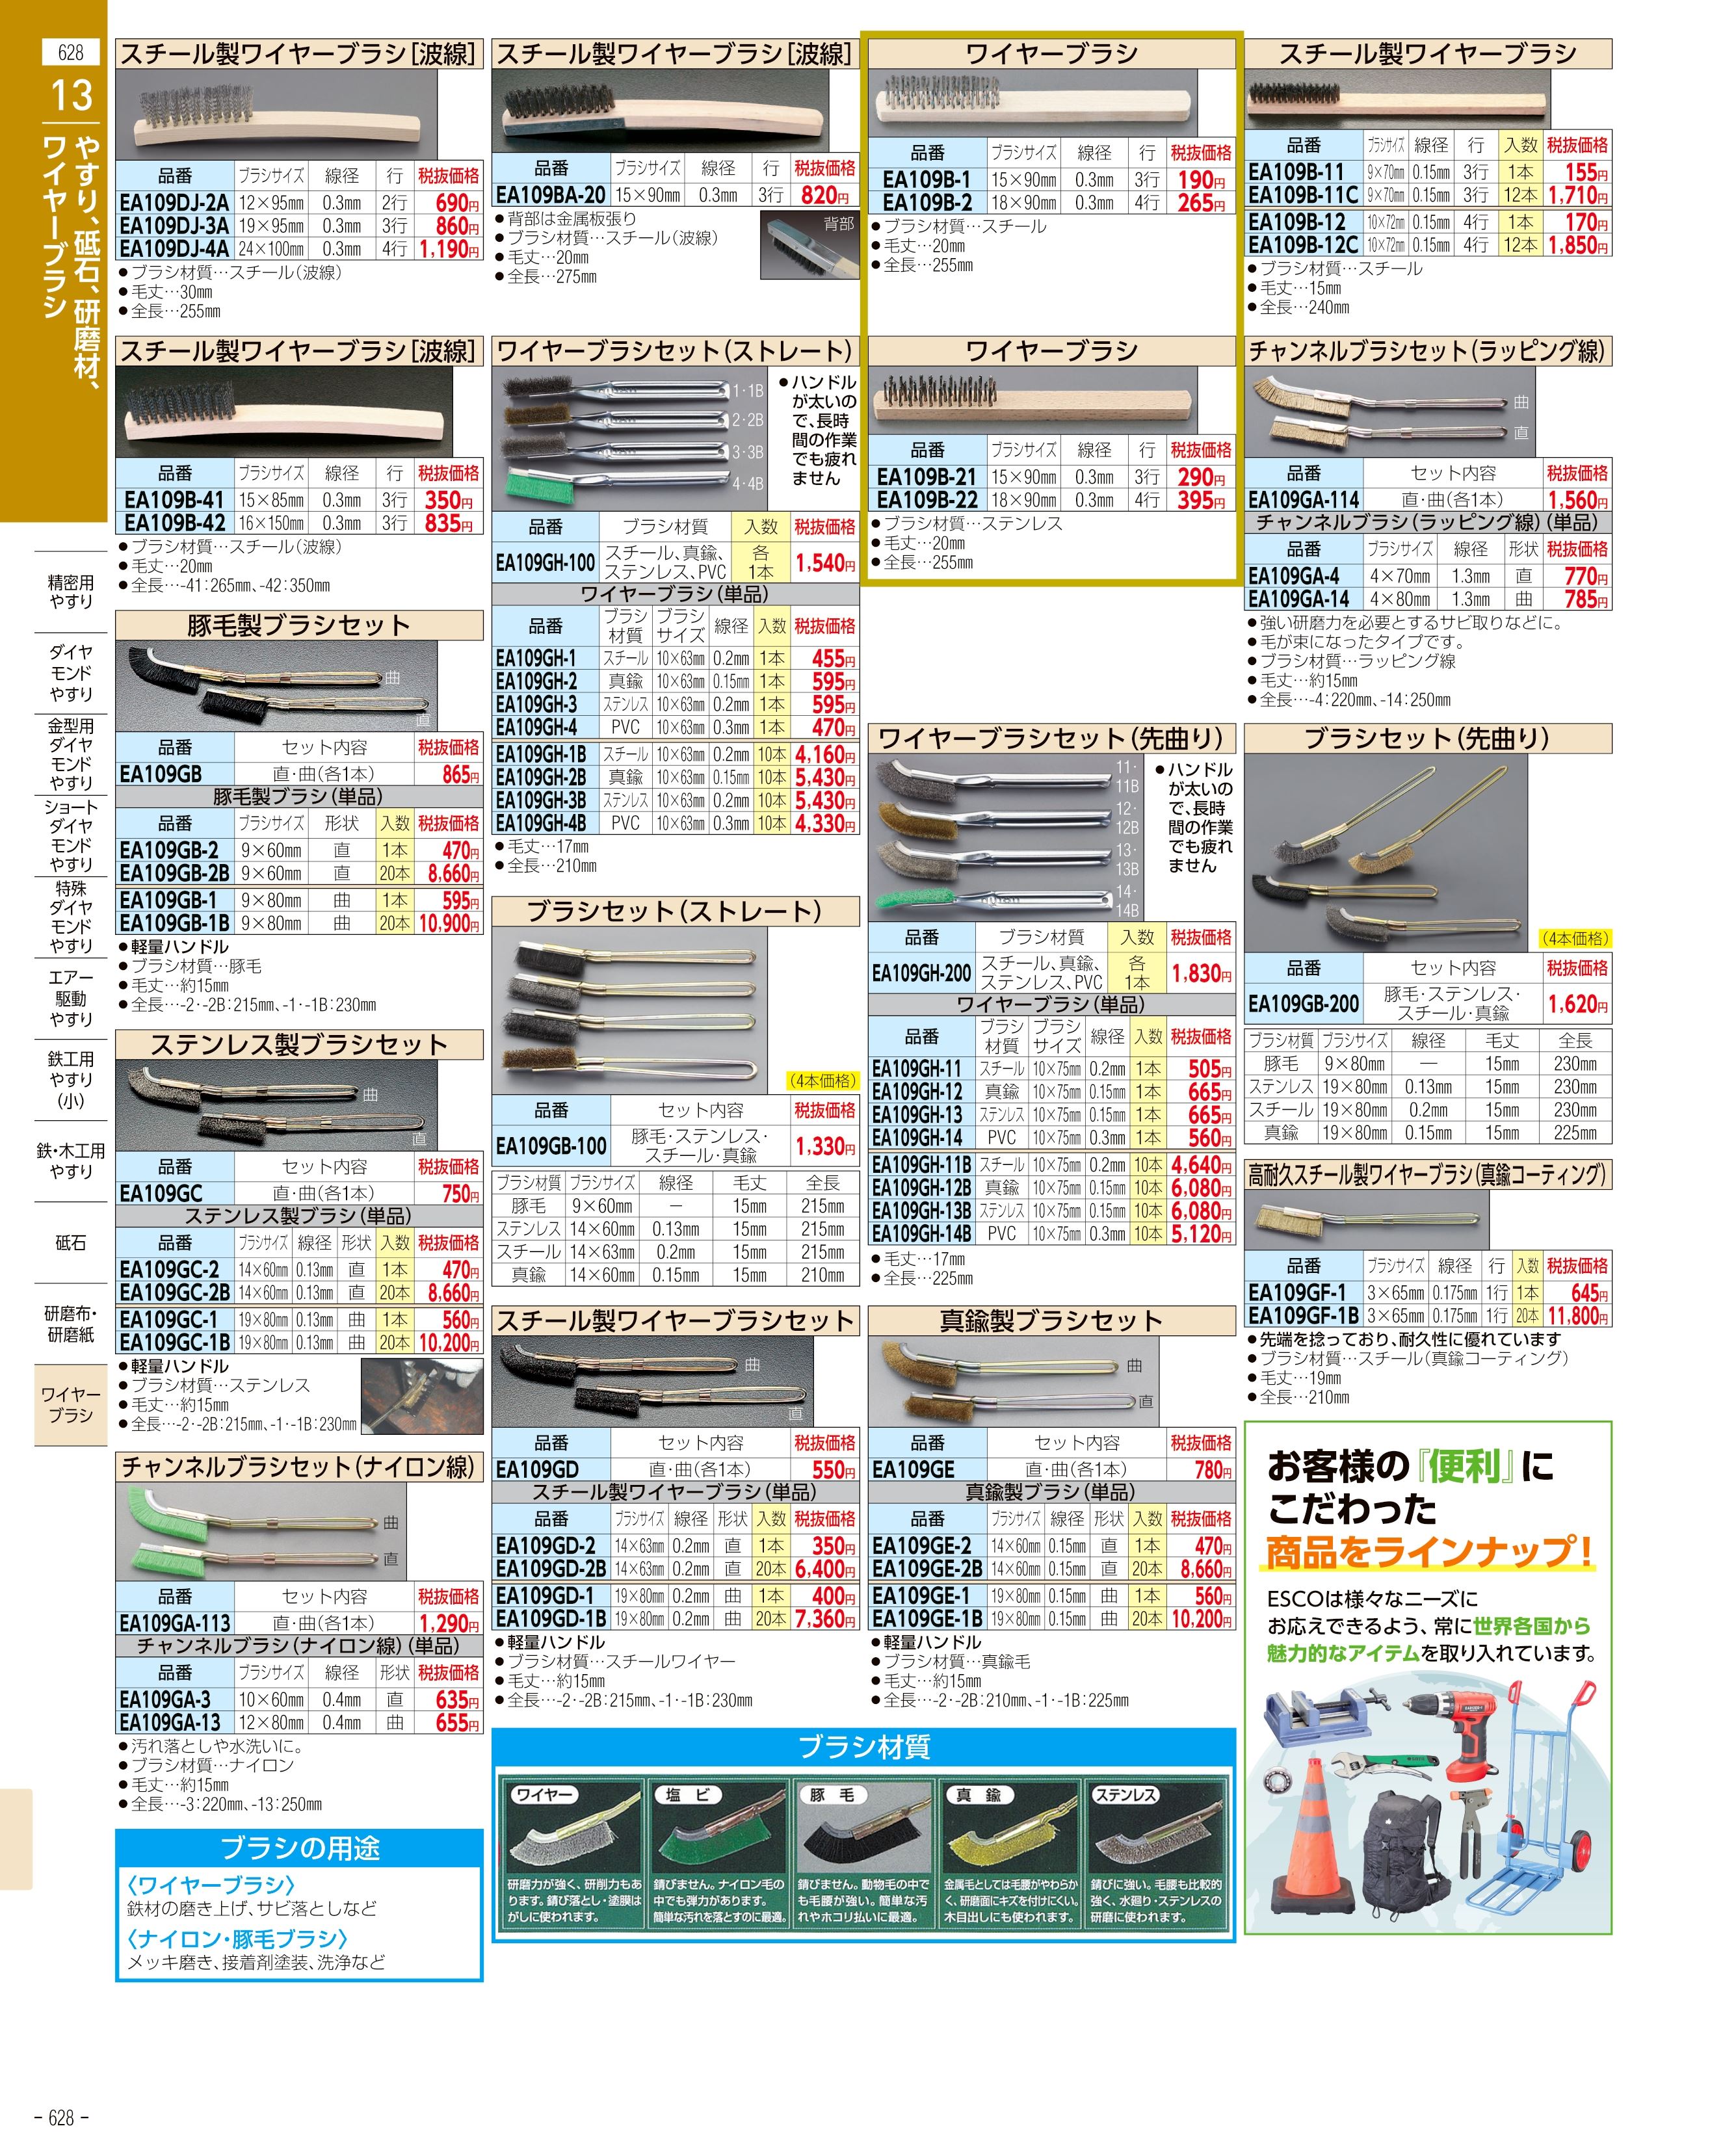 EA109DZ-10｜9x23mm パーツブラシ(10本)｜株式会社エスコ